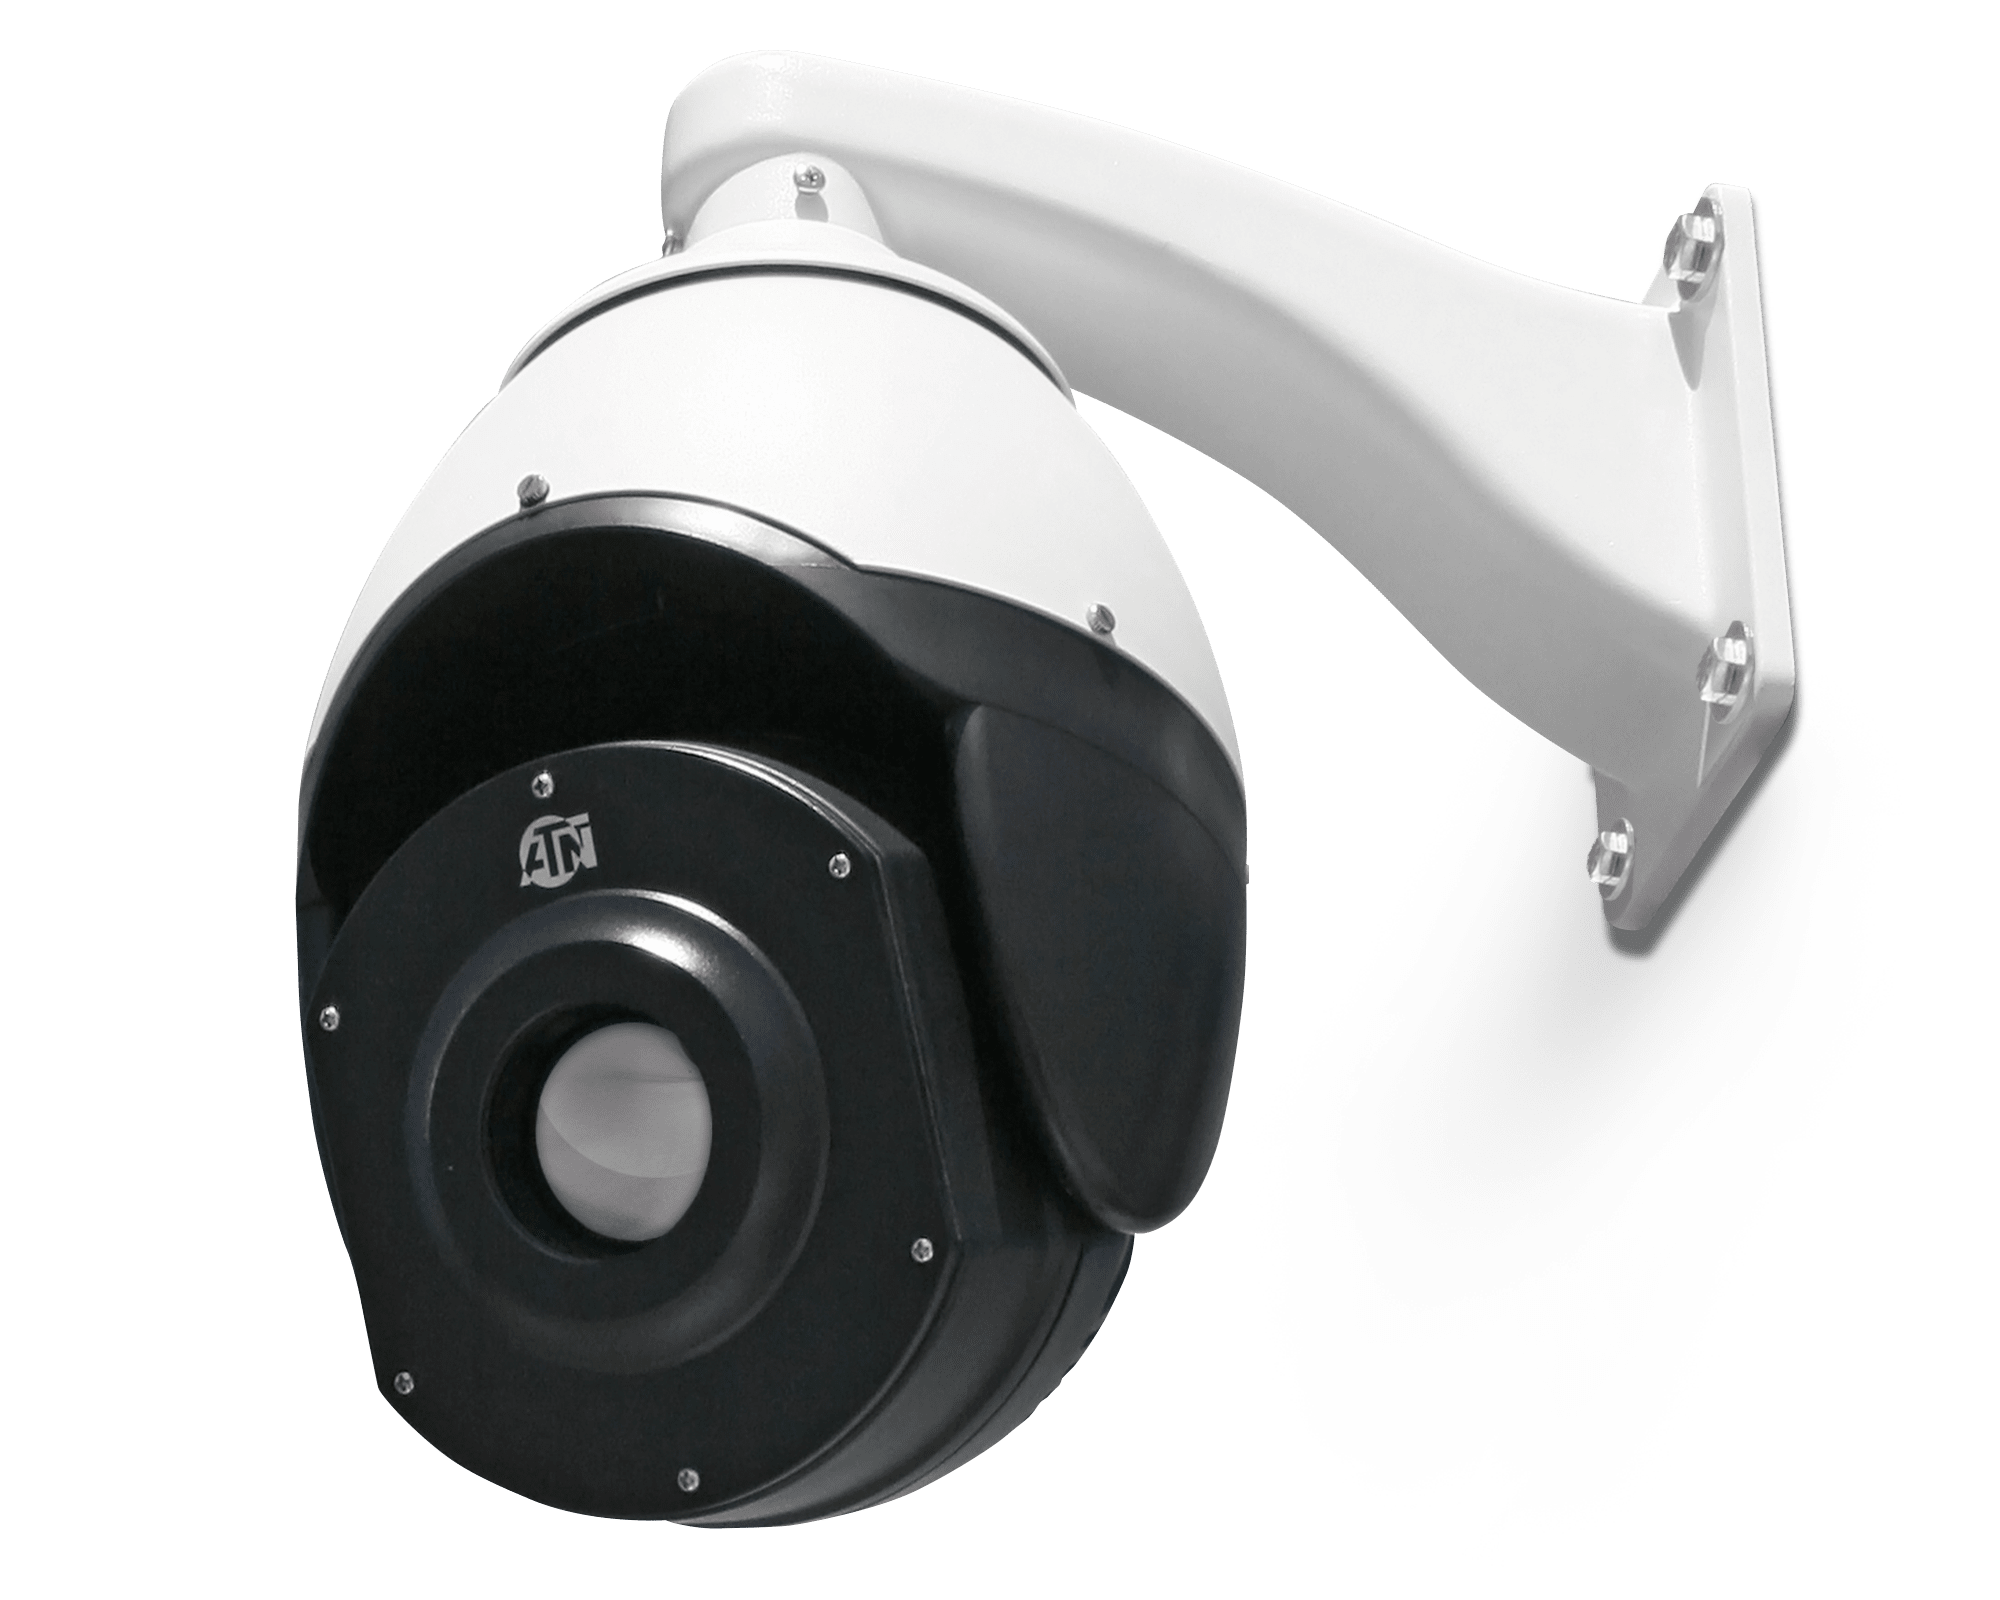 thermal security camera